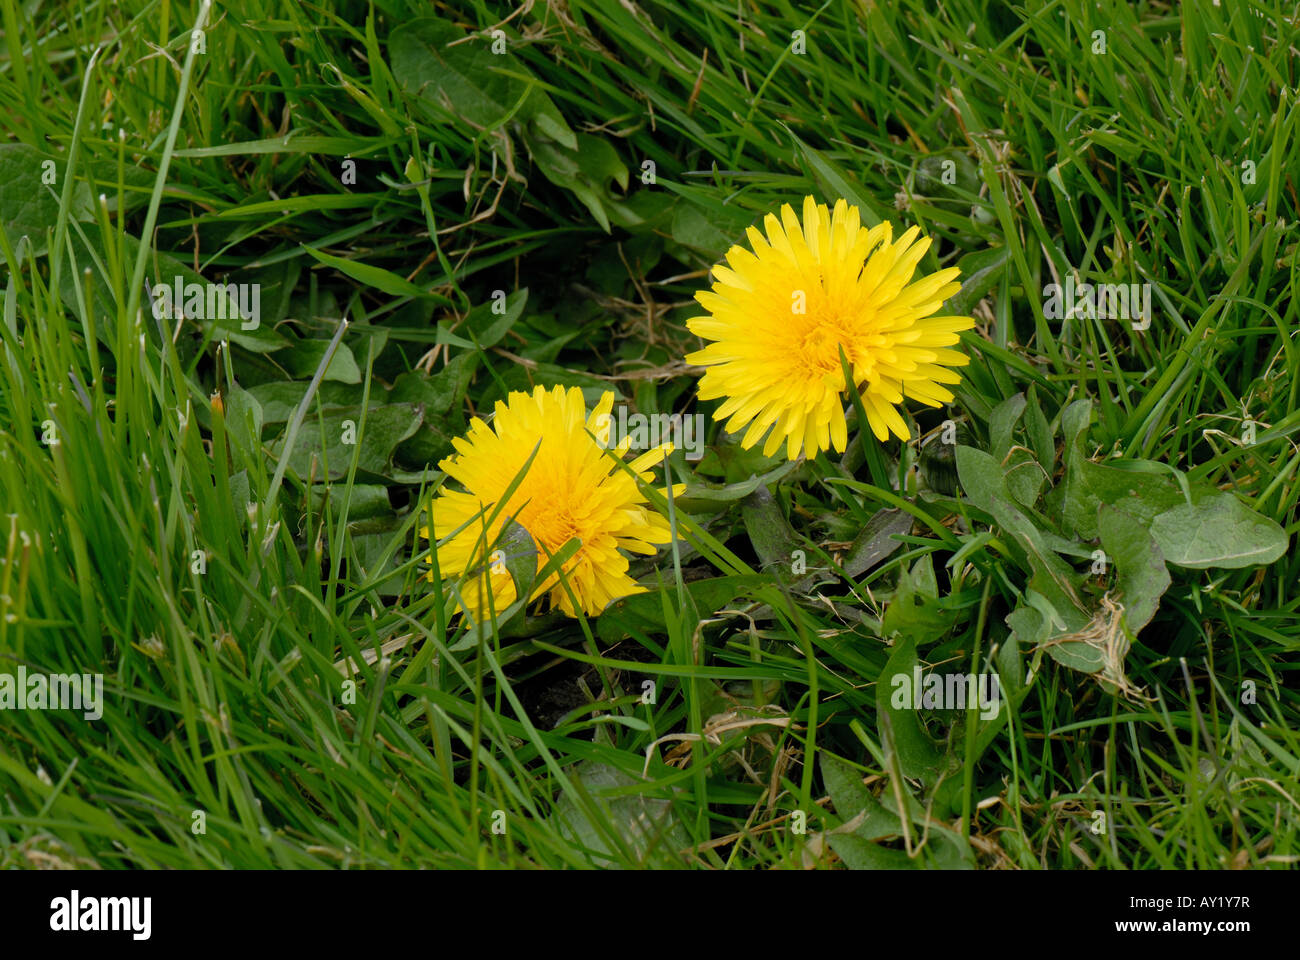 Dandelion Taraxacum officinale flowering in turfgrass Stock Photo